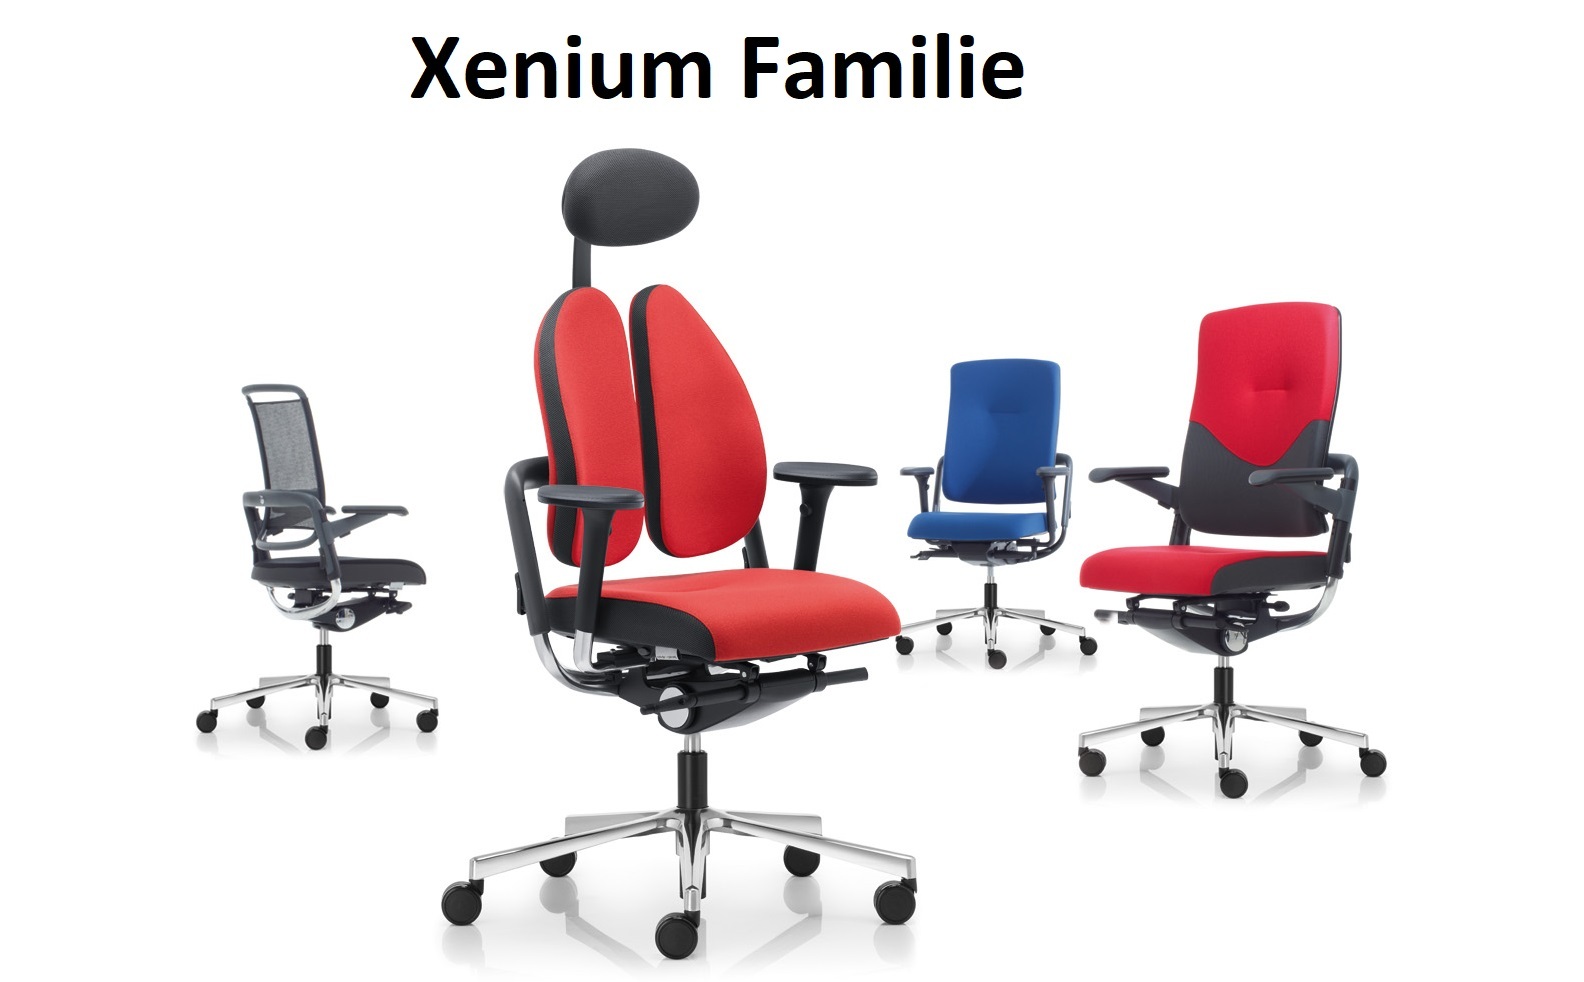 art-office-shop-nowy-styl-speed-xenium-familie